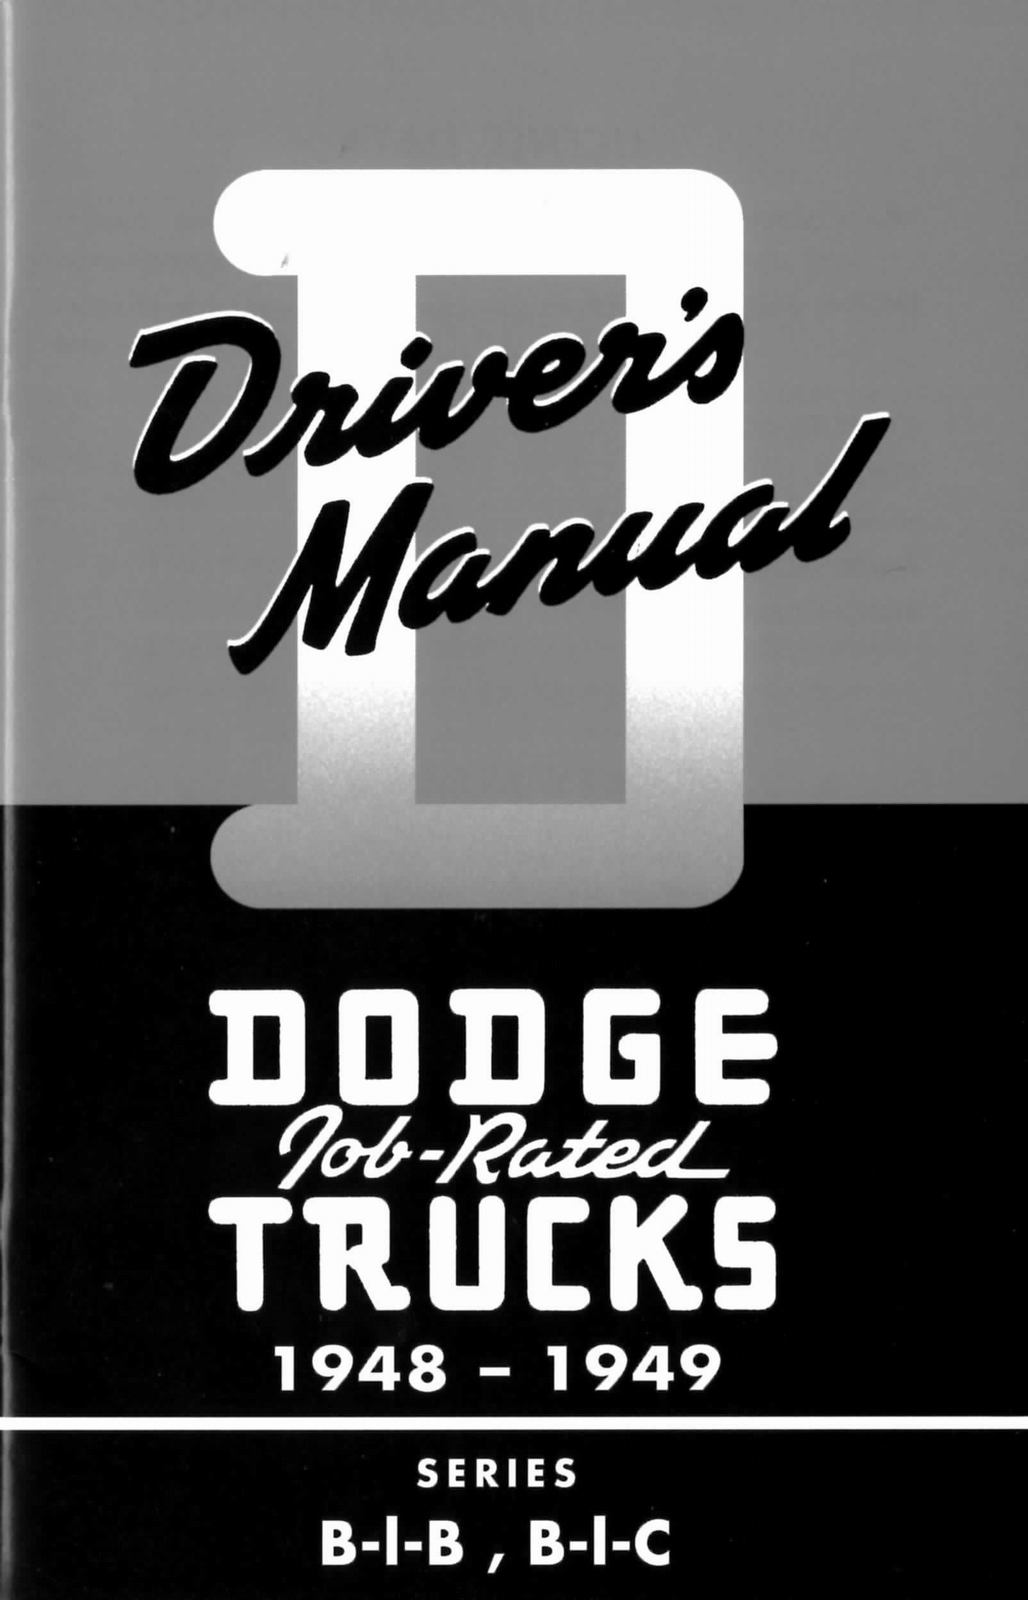 n_1949 Dodge Truck Manual-01.jpg